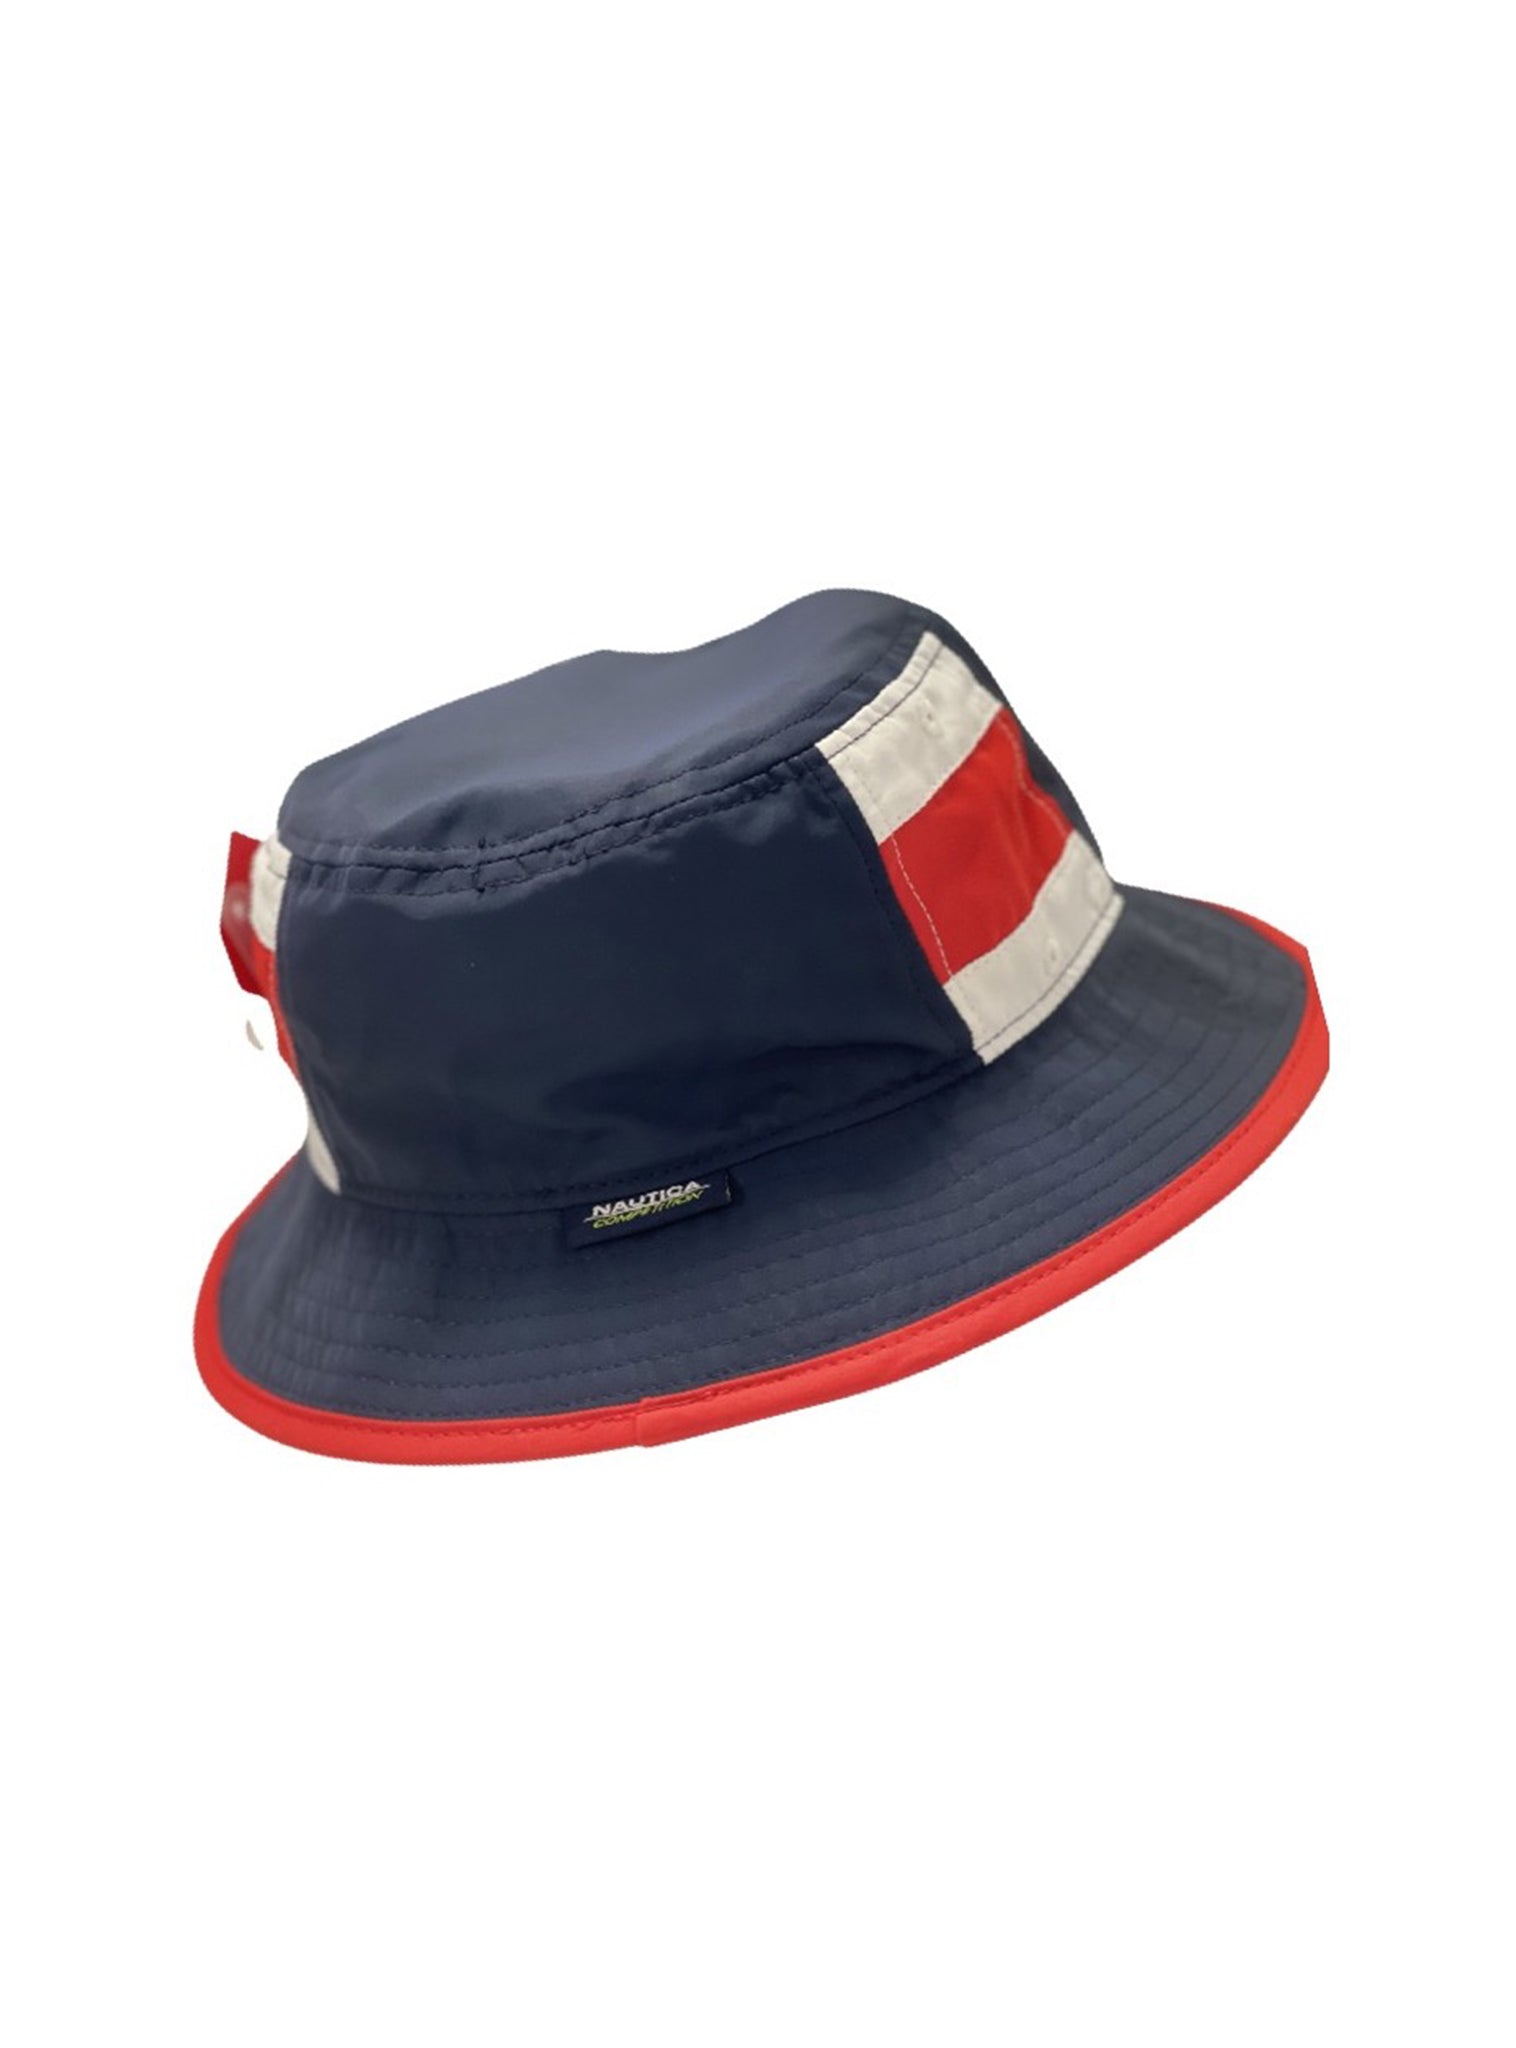 Bucket Hat Tricolor Nautica Competition Hombre